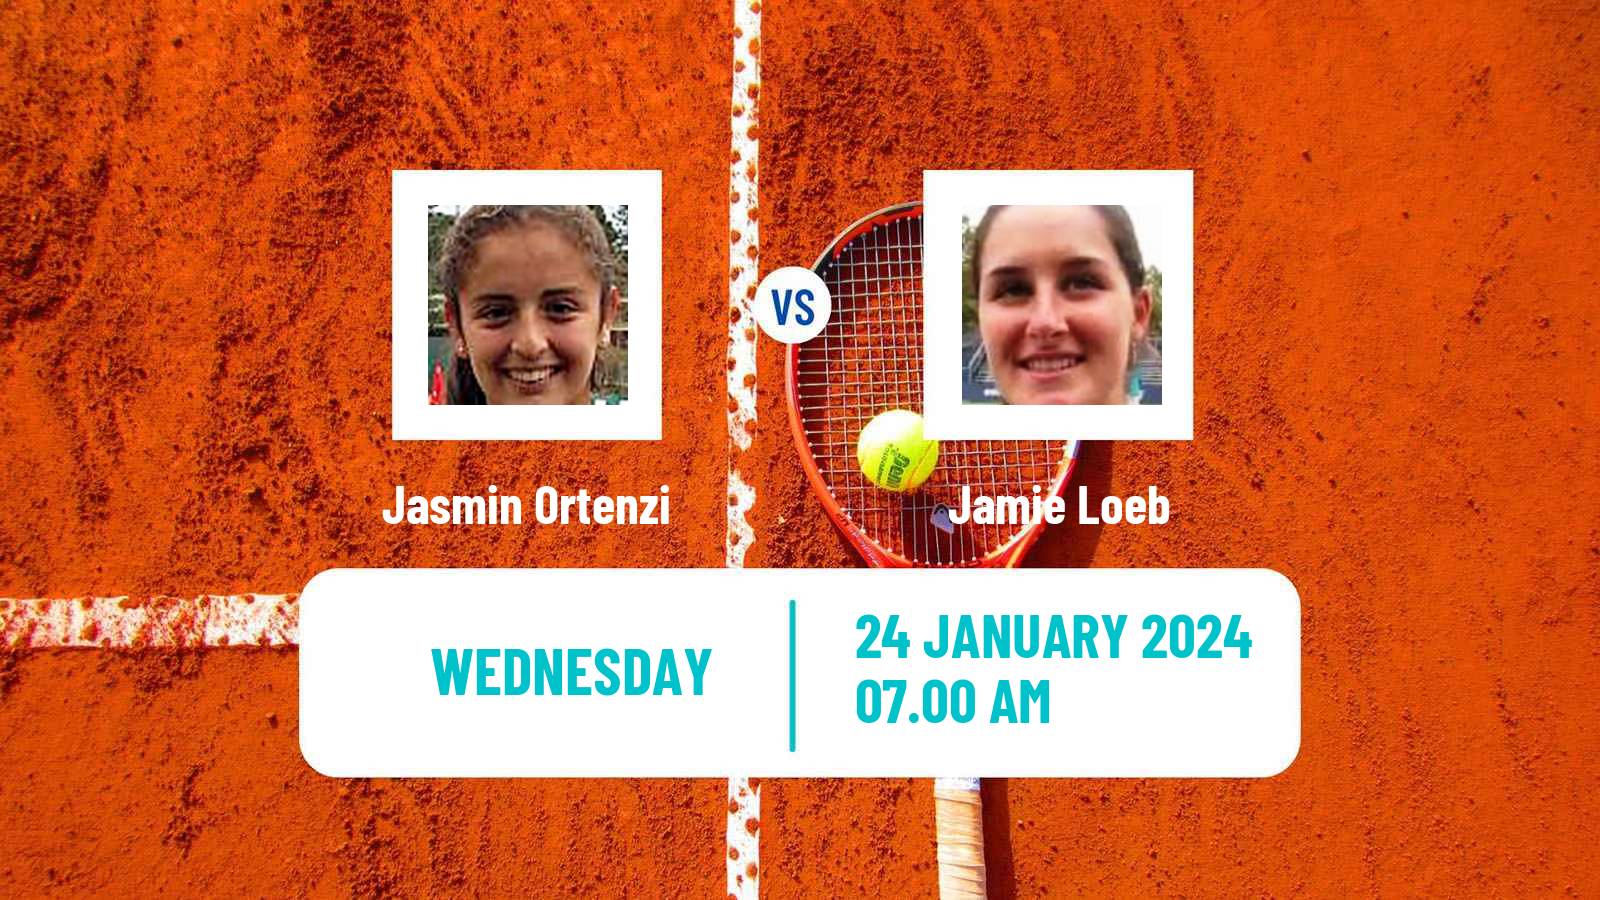 Tennis ITF W35 Buenos Aires 2 Women Jasmin Ortenzi - Jamie Loeb